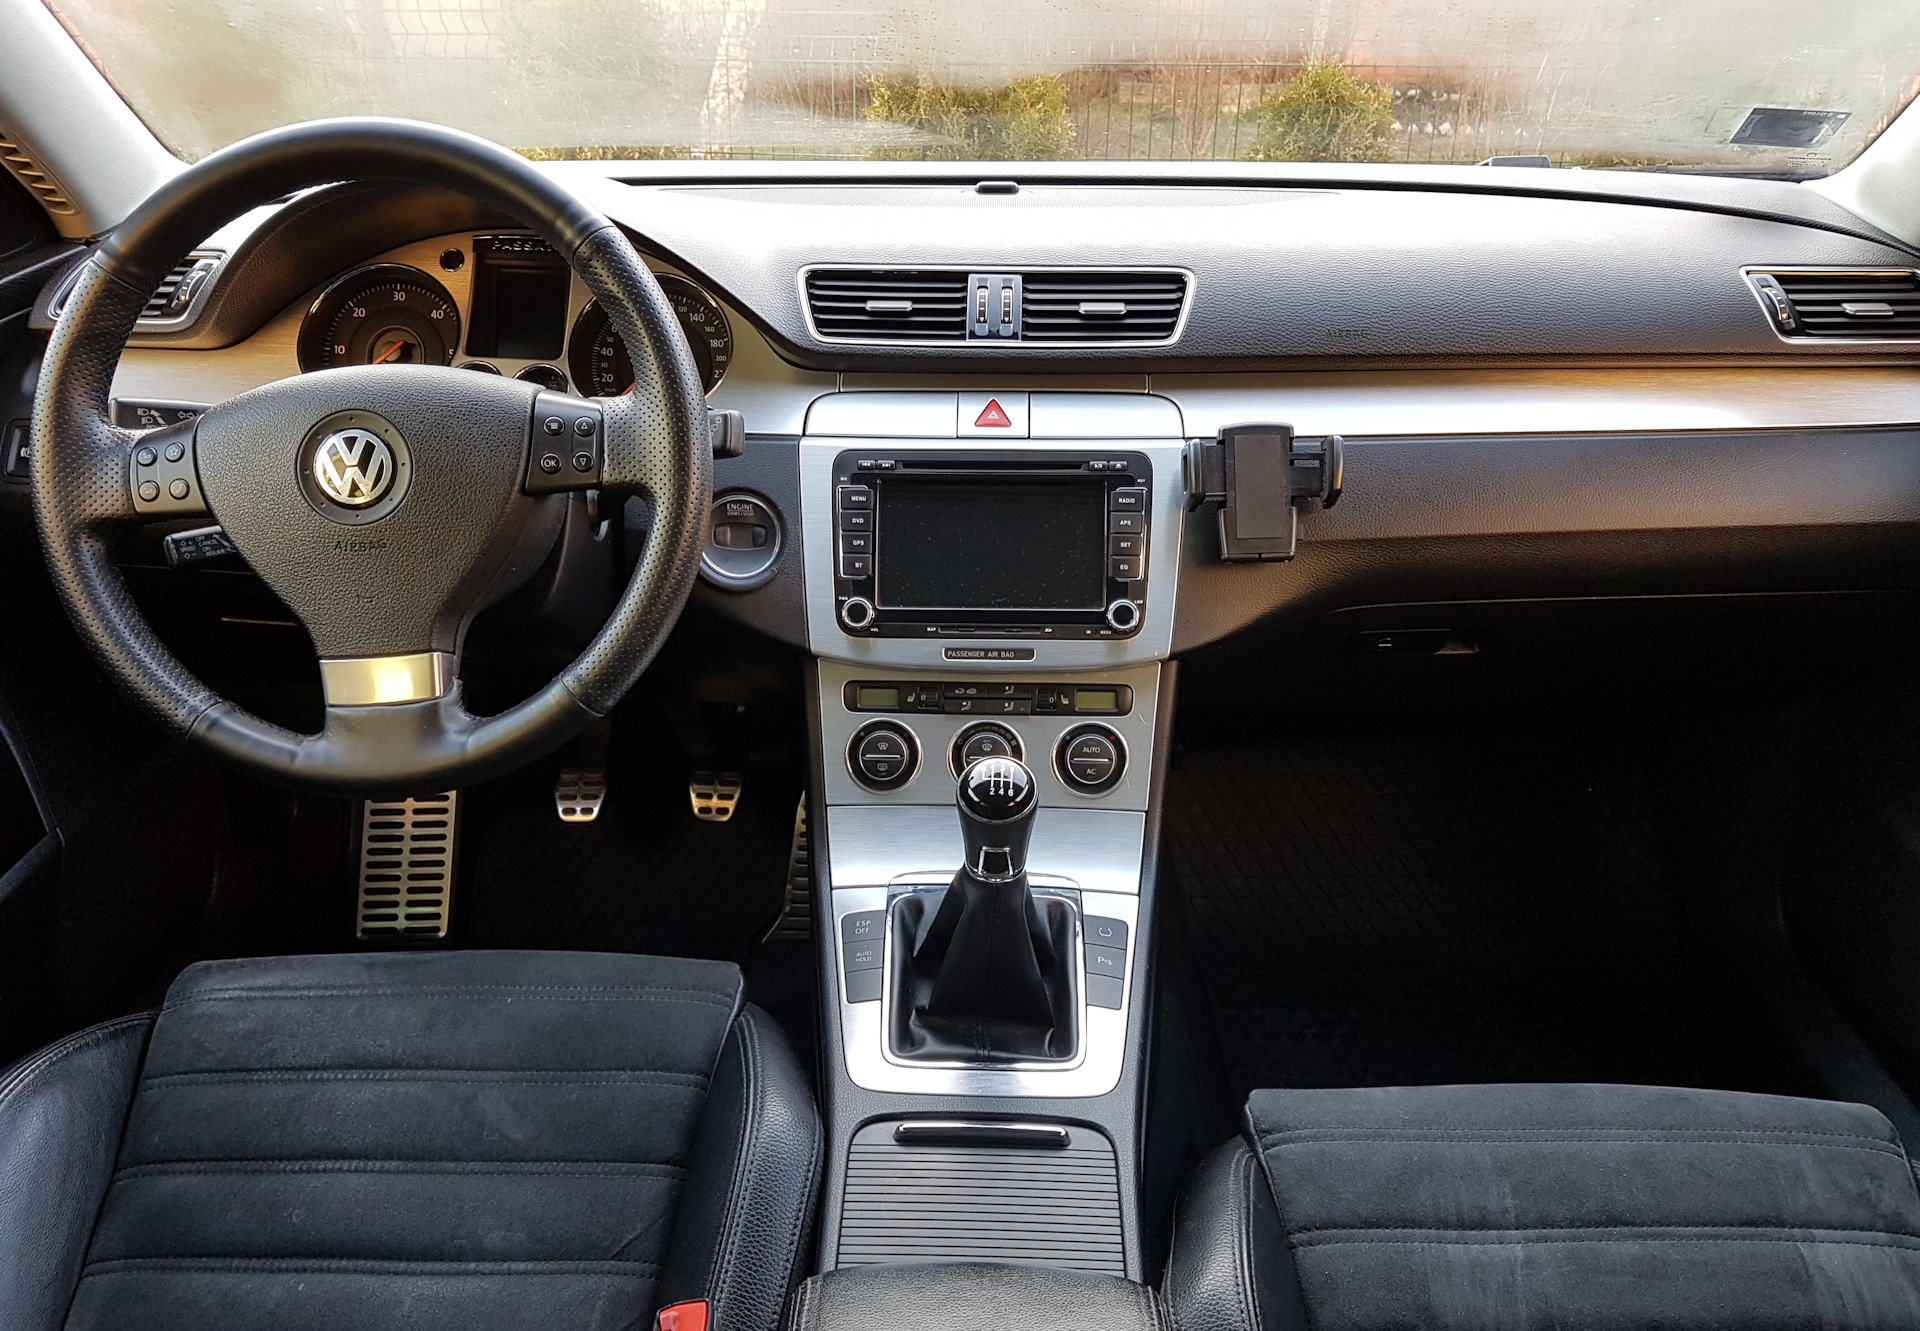 Открыть пассат б6. VW Passat b6 салон. Фольксваген Пассат б6 2008 салон. WV Passat b6 салон. Volkswagen Passat b6 Interior.